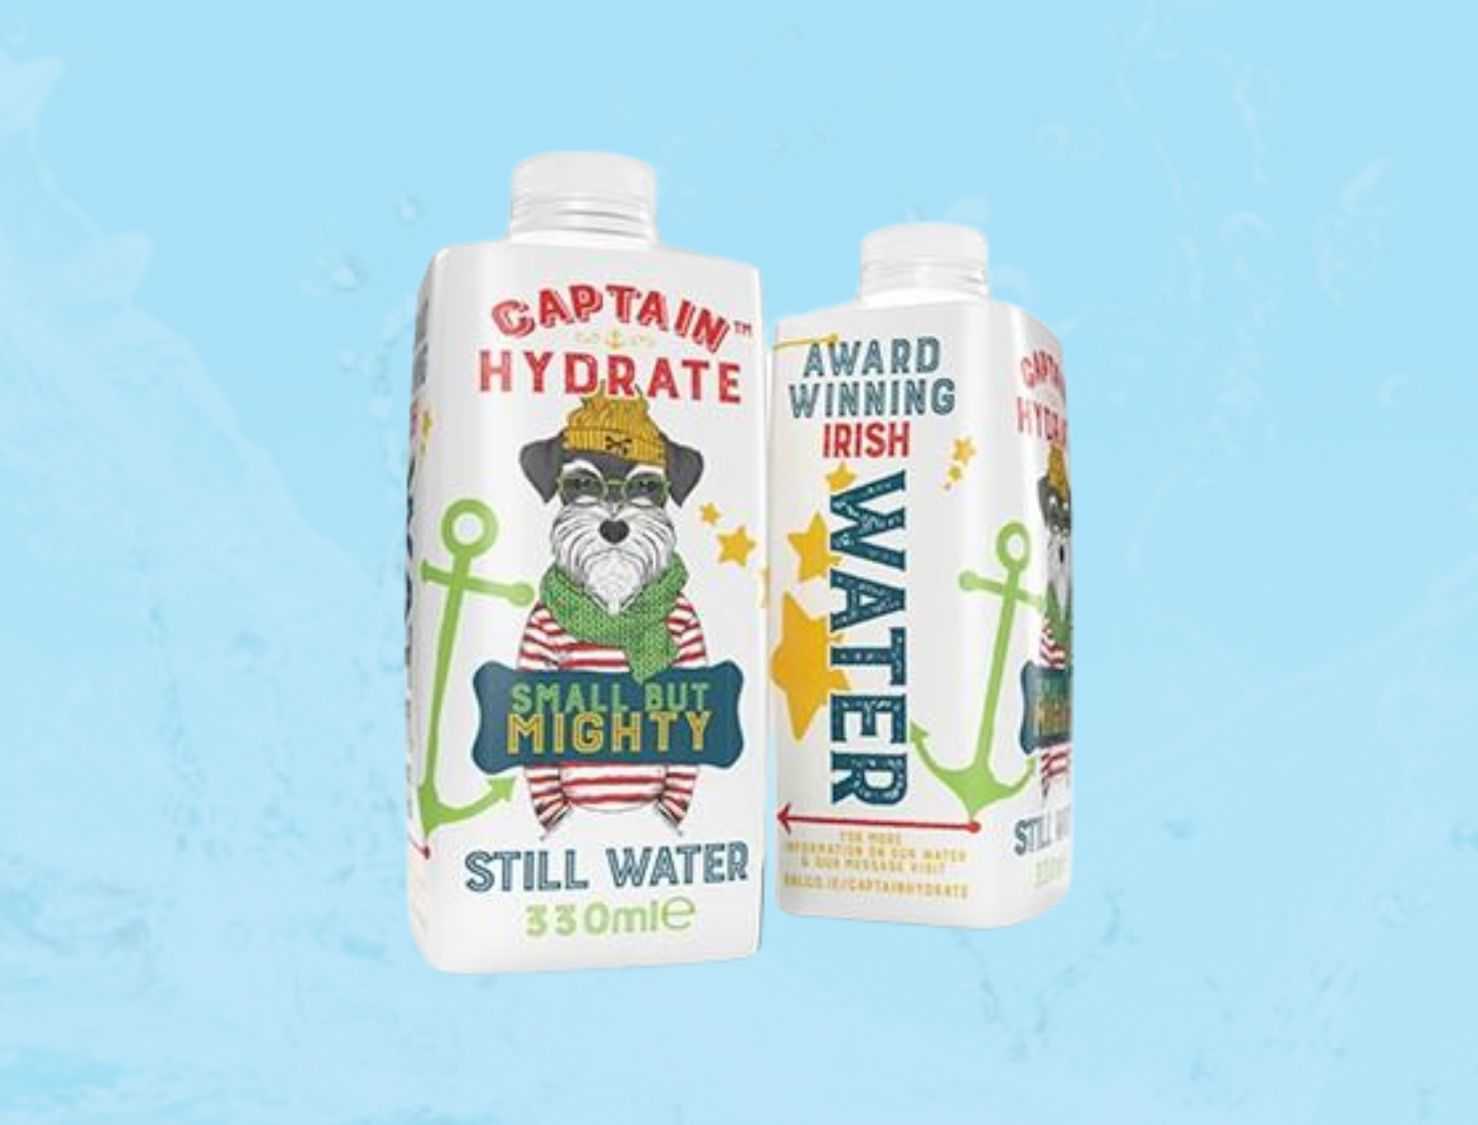 captain-hydrate-4-copy